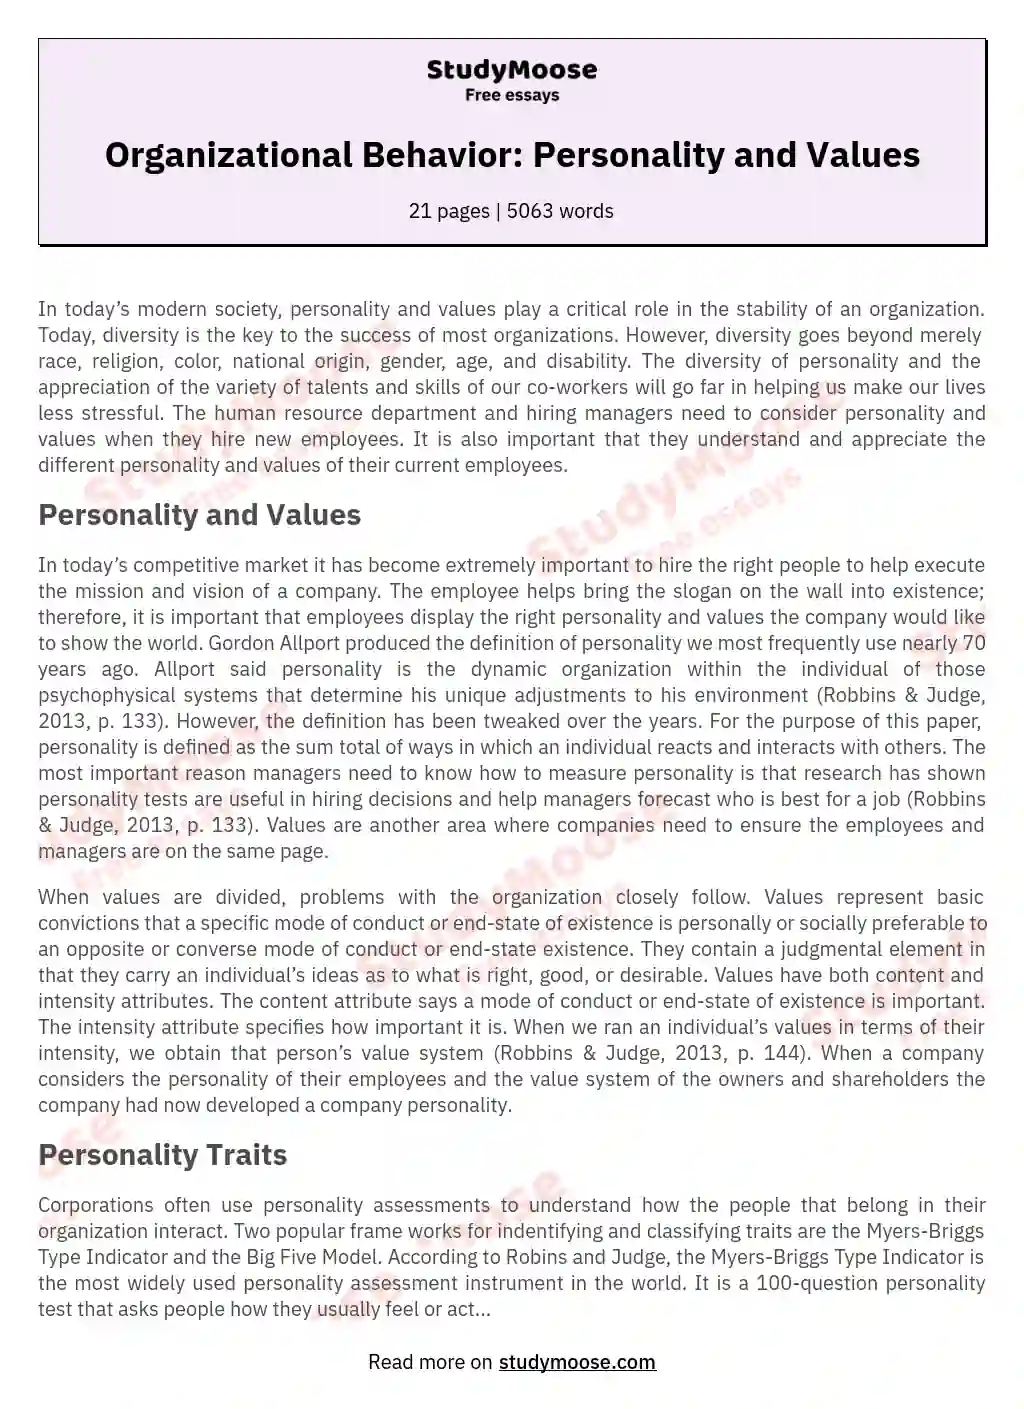 Organizational Behavior: Personality and Values essay